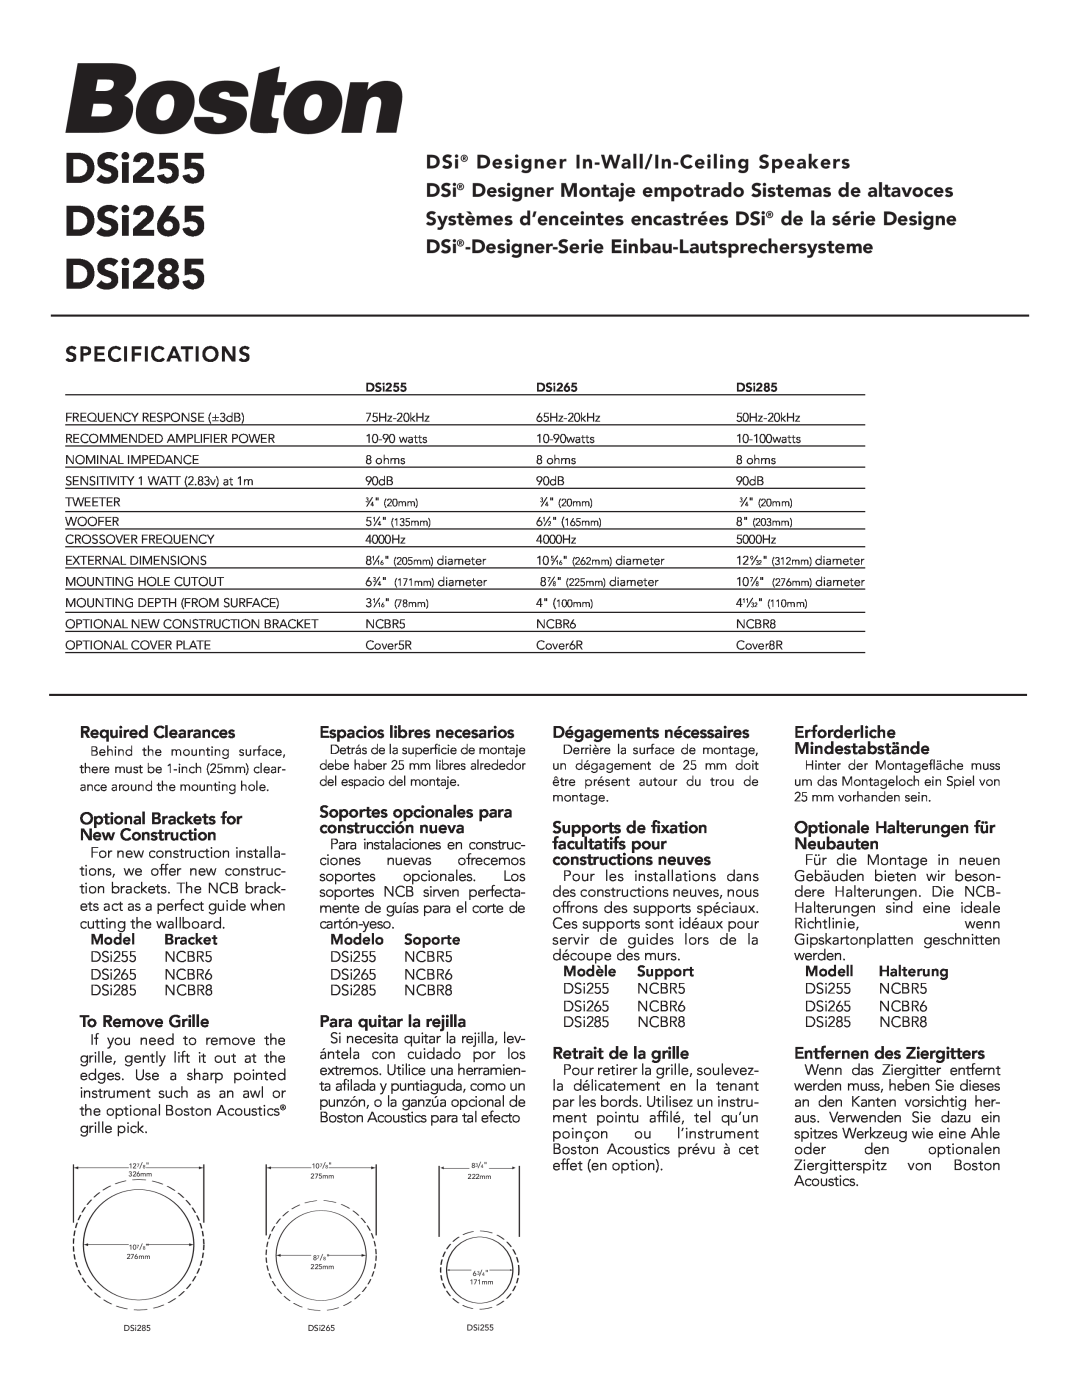 Boston Acoustics DSI285 specifications DSi255 DSi265 DSi285, Specifications, DSi Designer In-Wall/In-CeilingSpeakers 